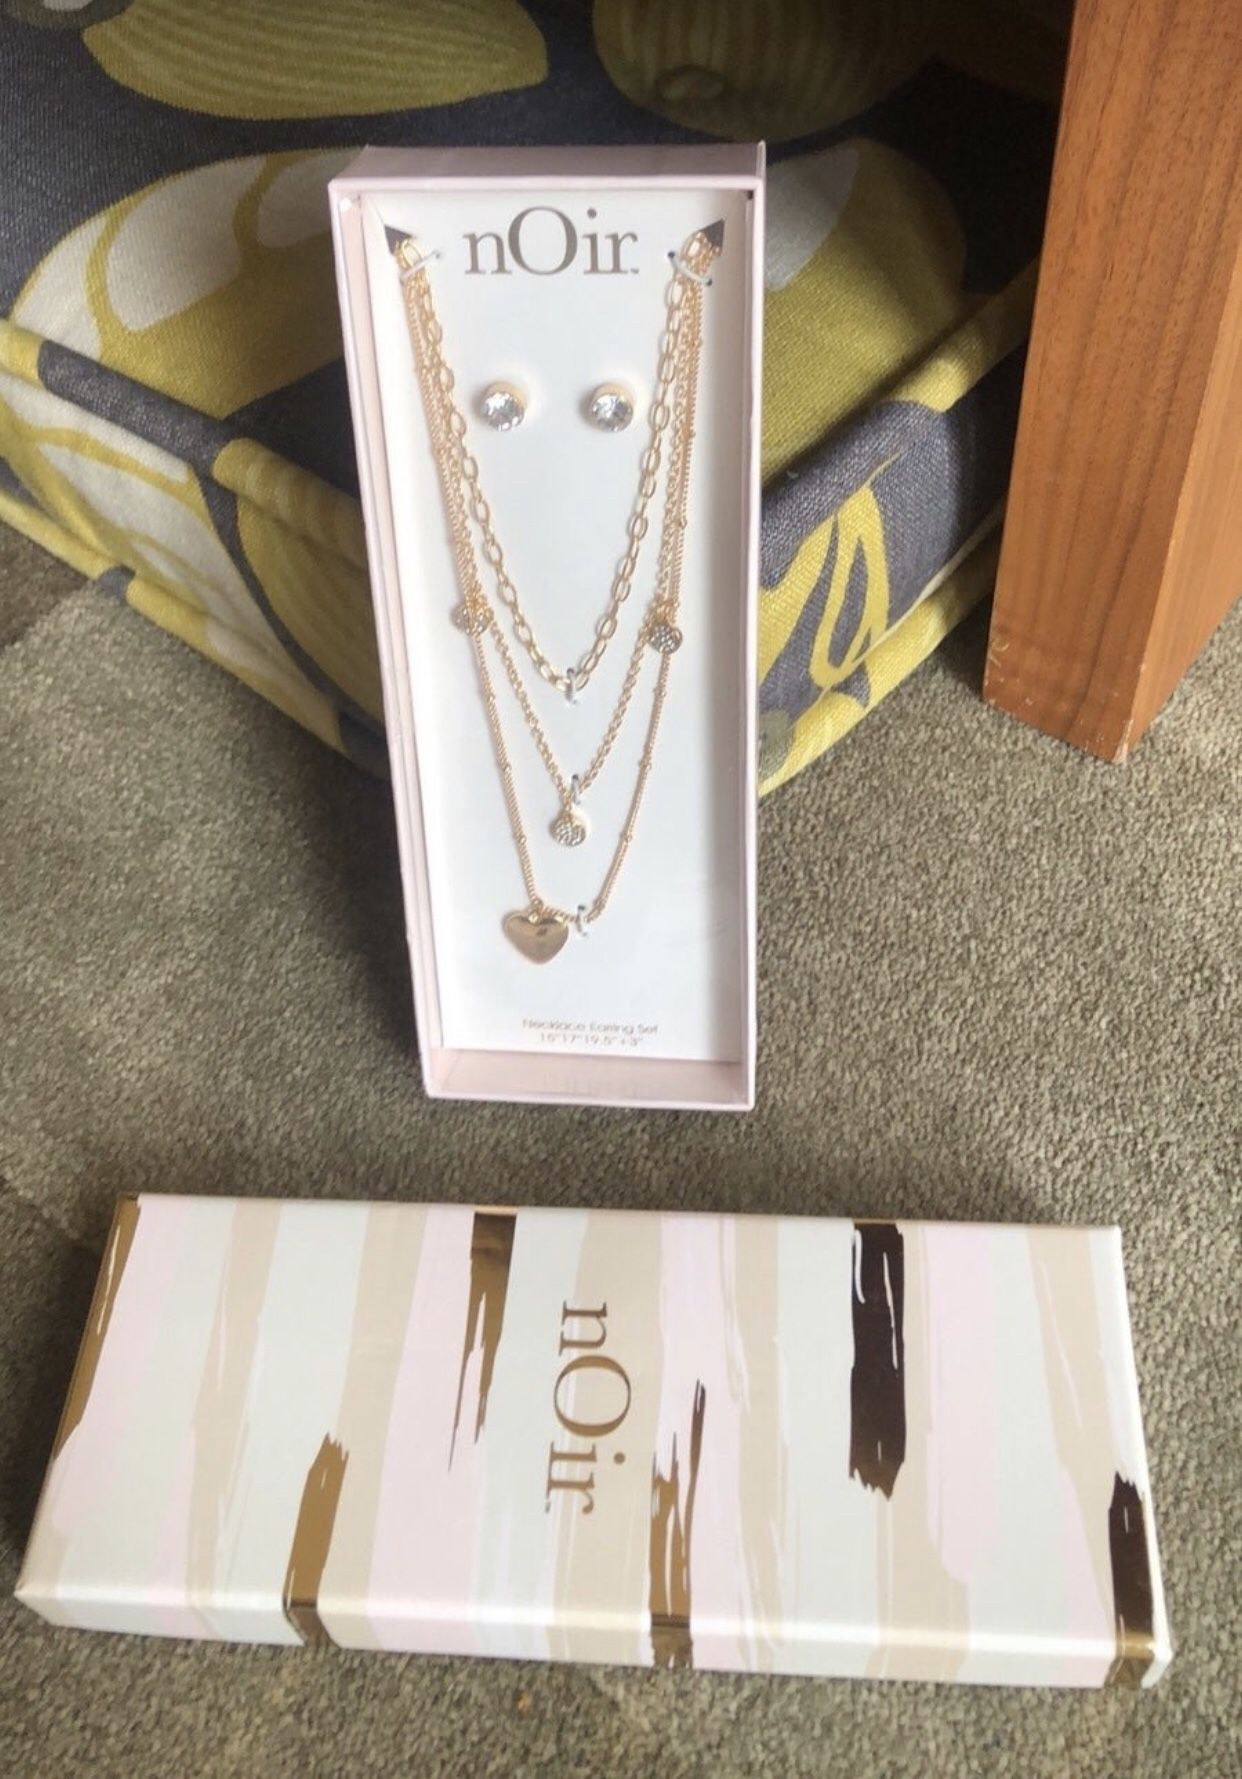 NOIR Necklace & Earring Set $10 Pick Up